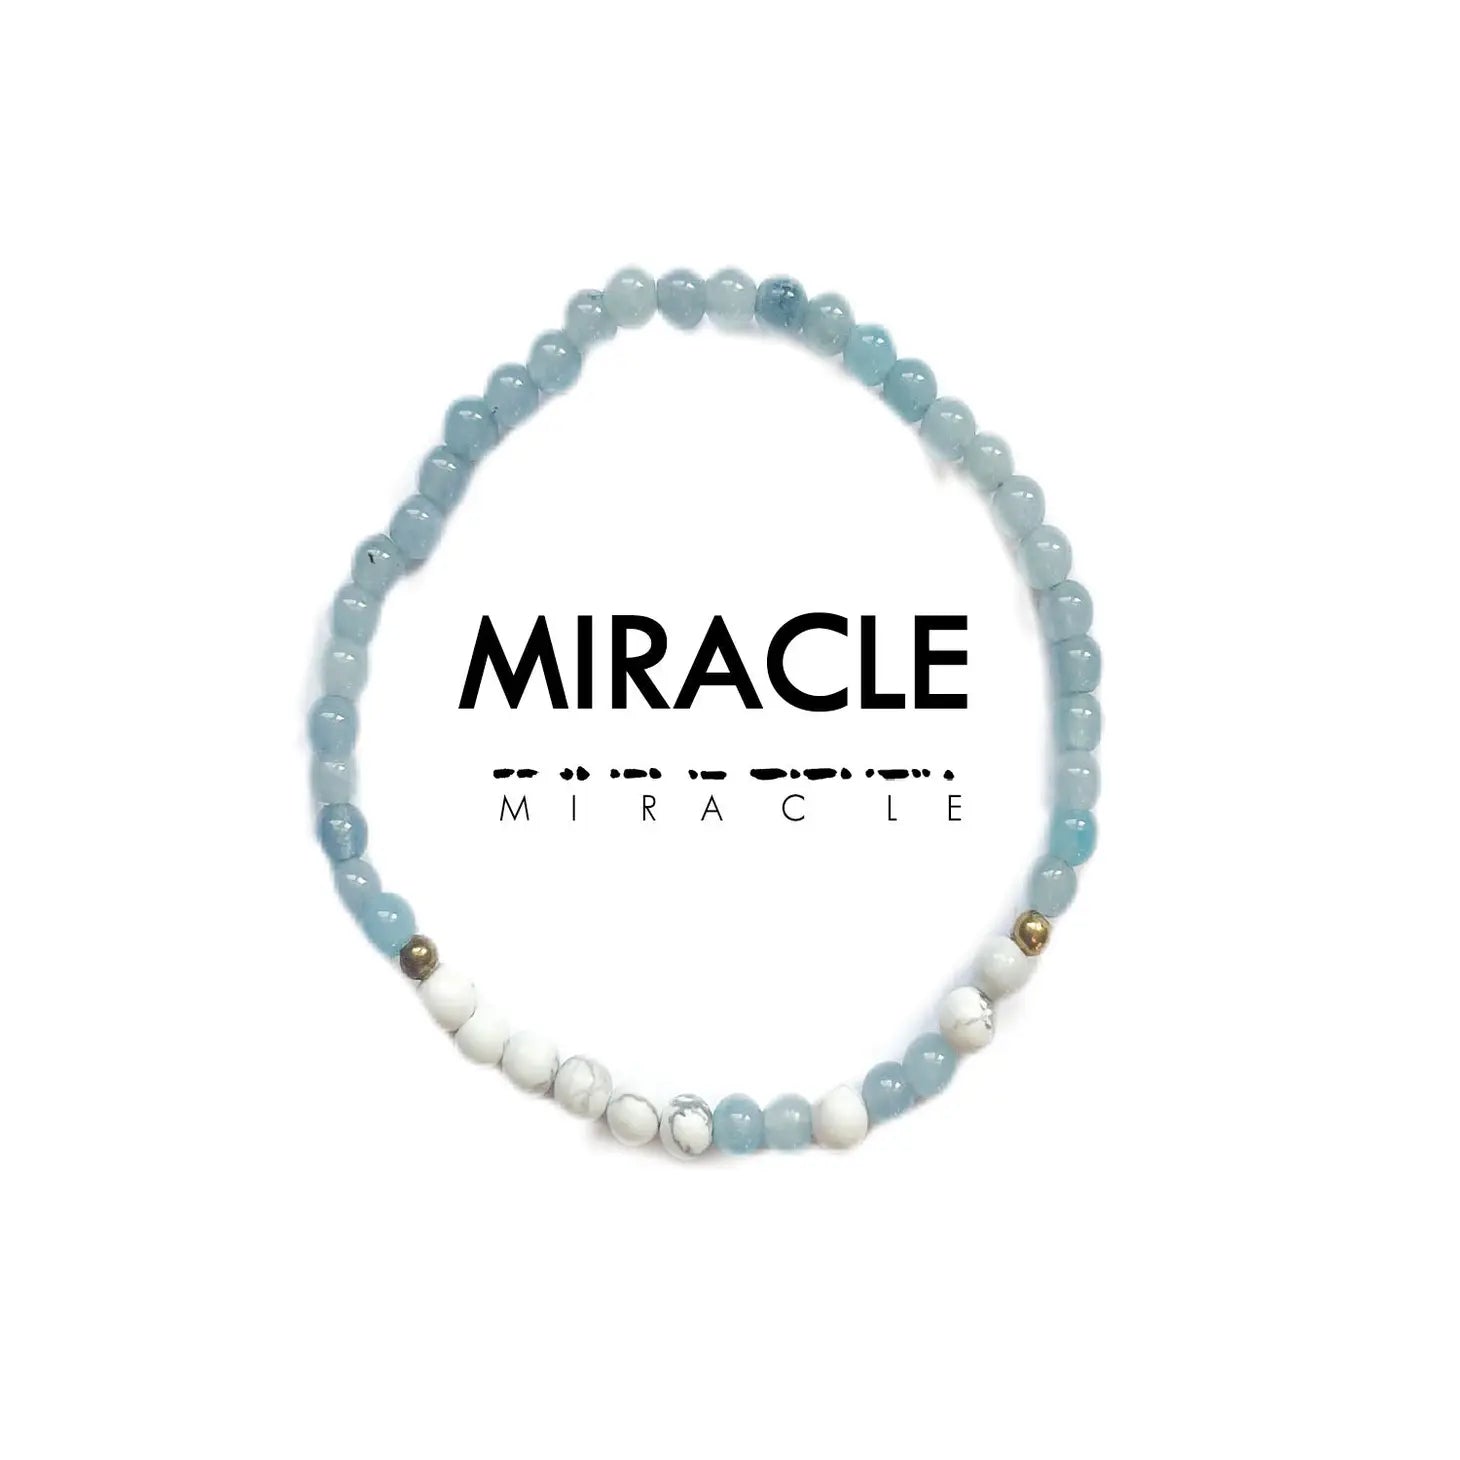 Morse Code Bracelet - Miracle